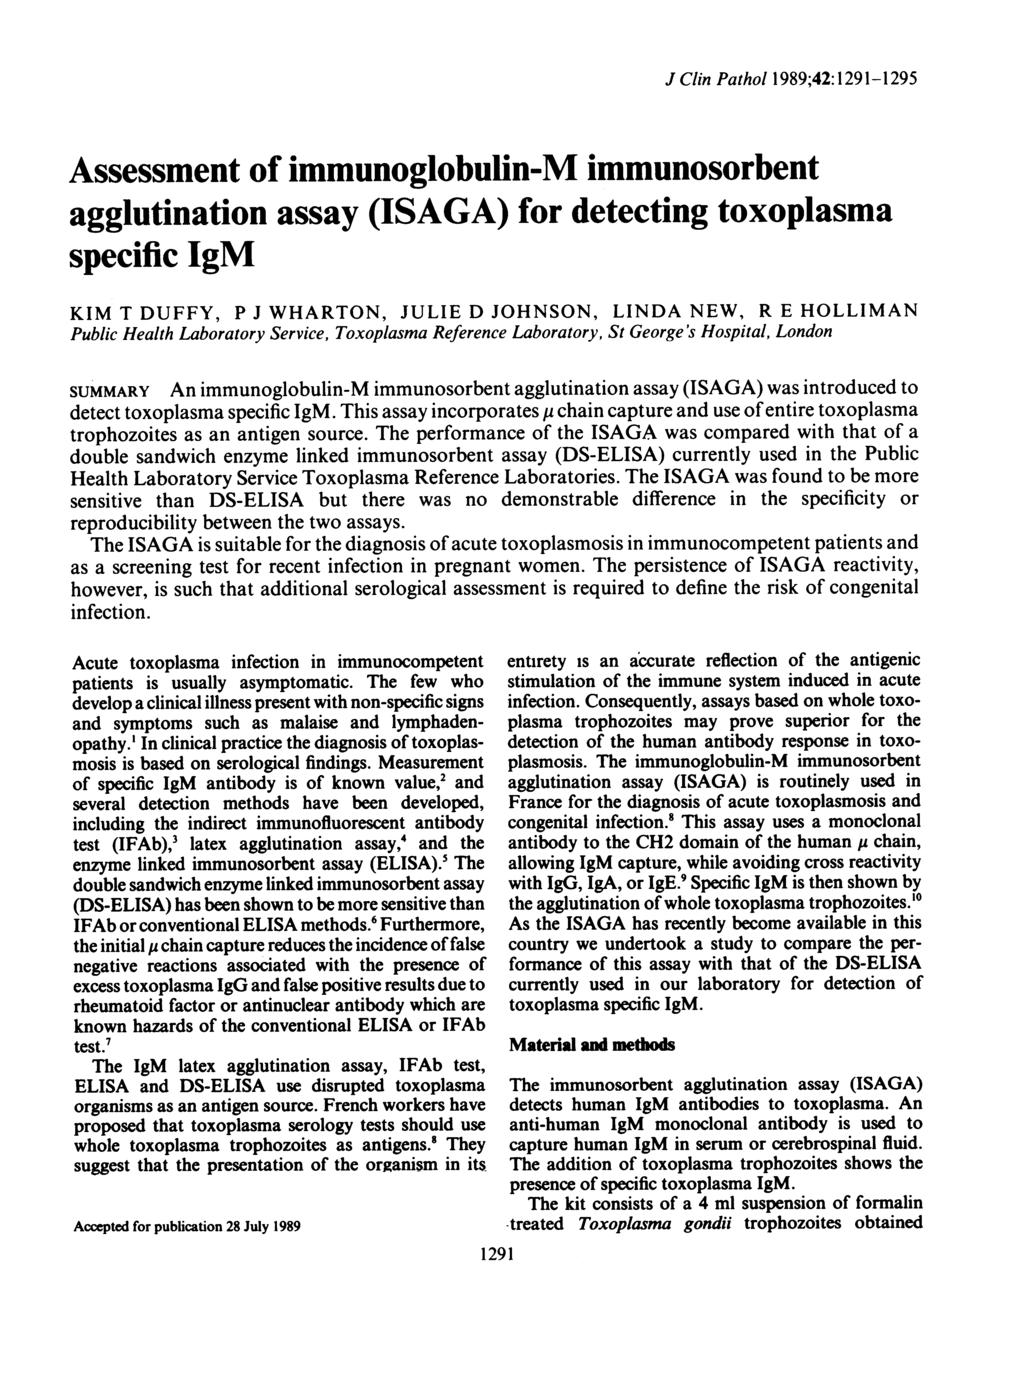 J Clin Pathol 1989;42:1291-1295 Assessment of immunoglobulin-m immunosorbent agglutination assay (ISAGA) for detecting toxoplasma specific IgM KIM T DUFFY, P J WHARTON, JULIE D JOHNSON, LINDA NEW, R